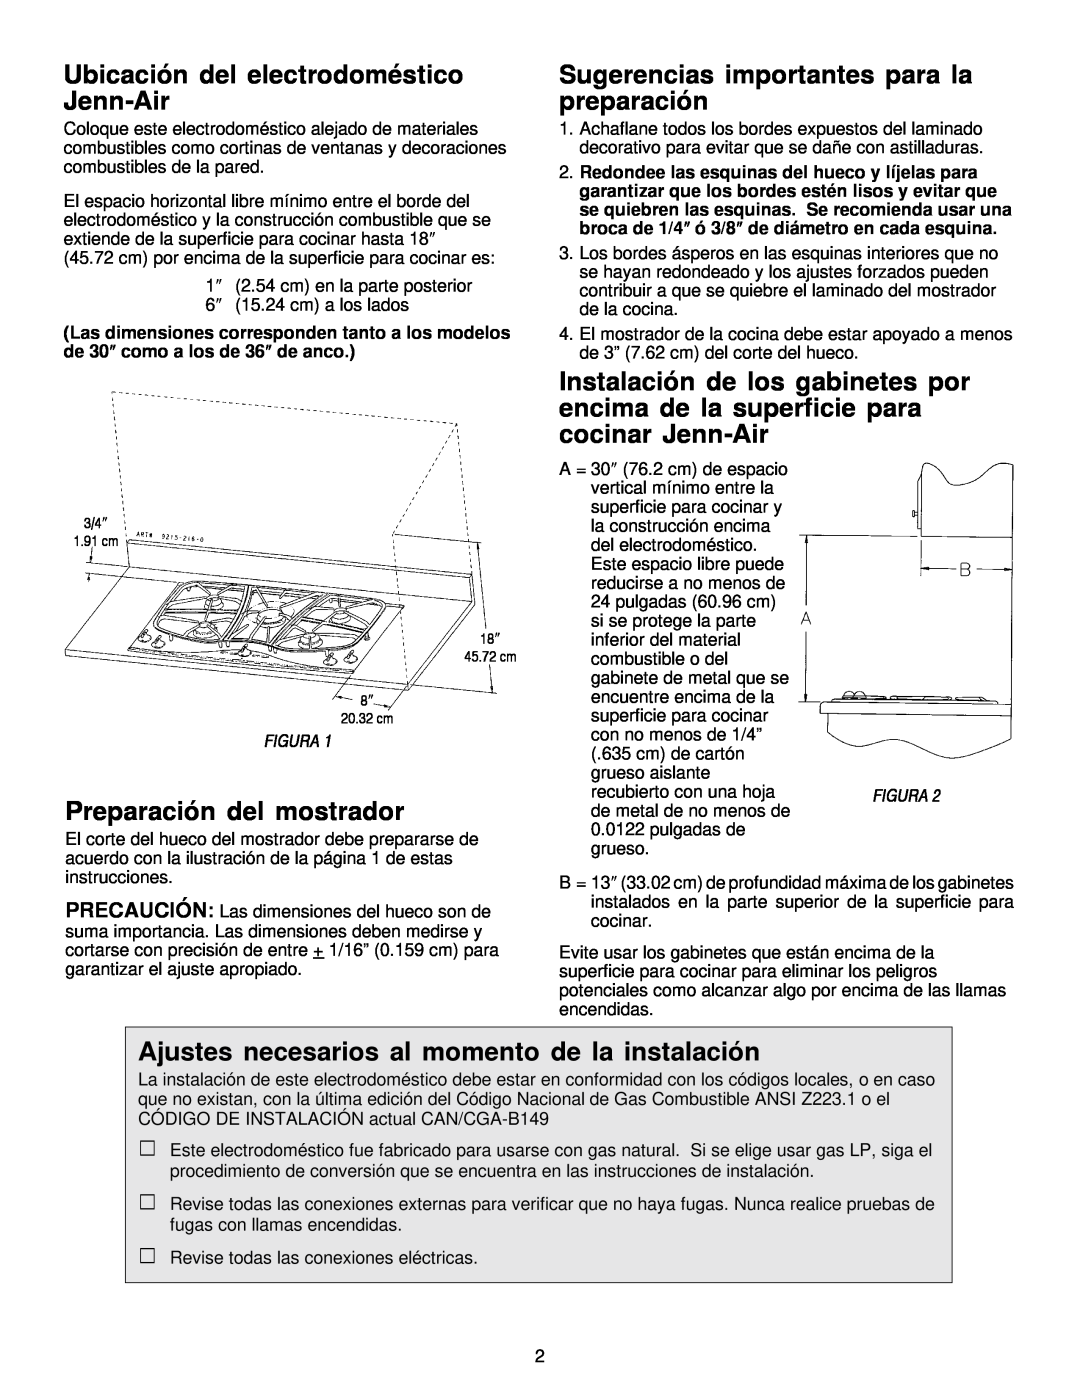 Jenn-Air JGC9536, JGC9430 installation manual Ubicación del electrodoméstico Jenn-Air, Preparación del mostrador, Figura 